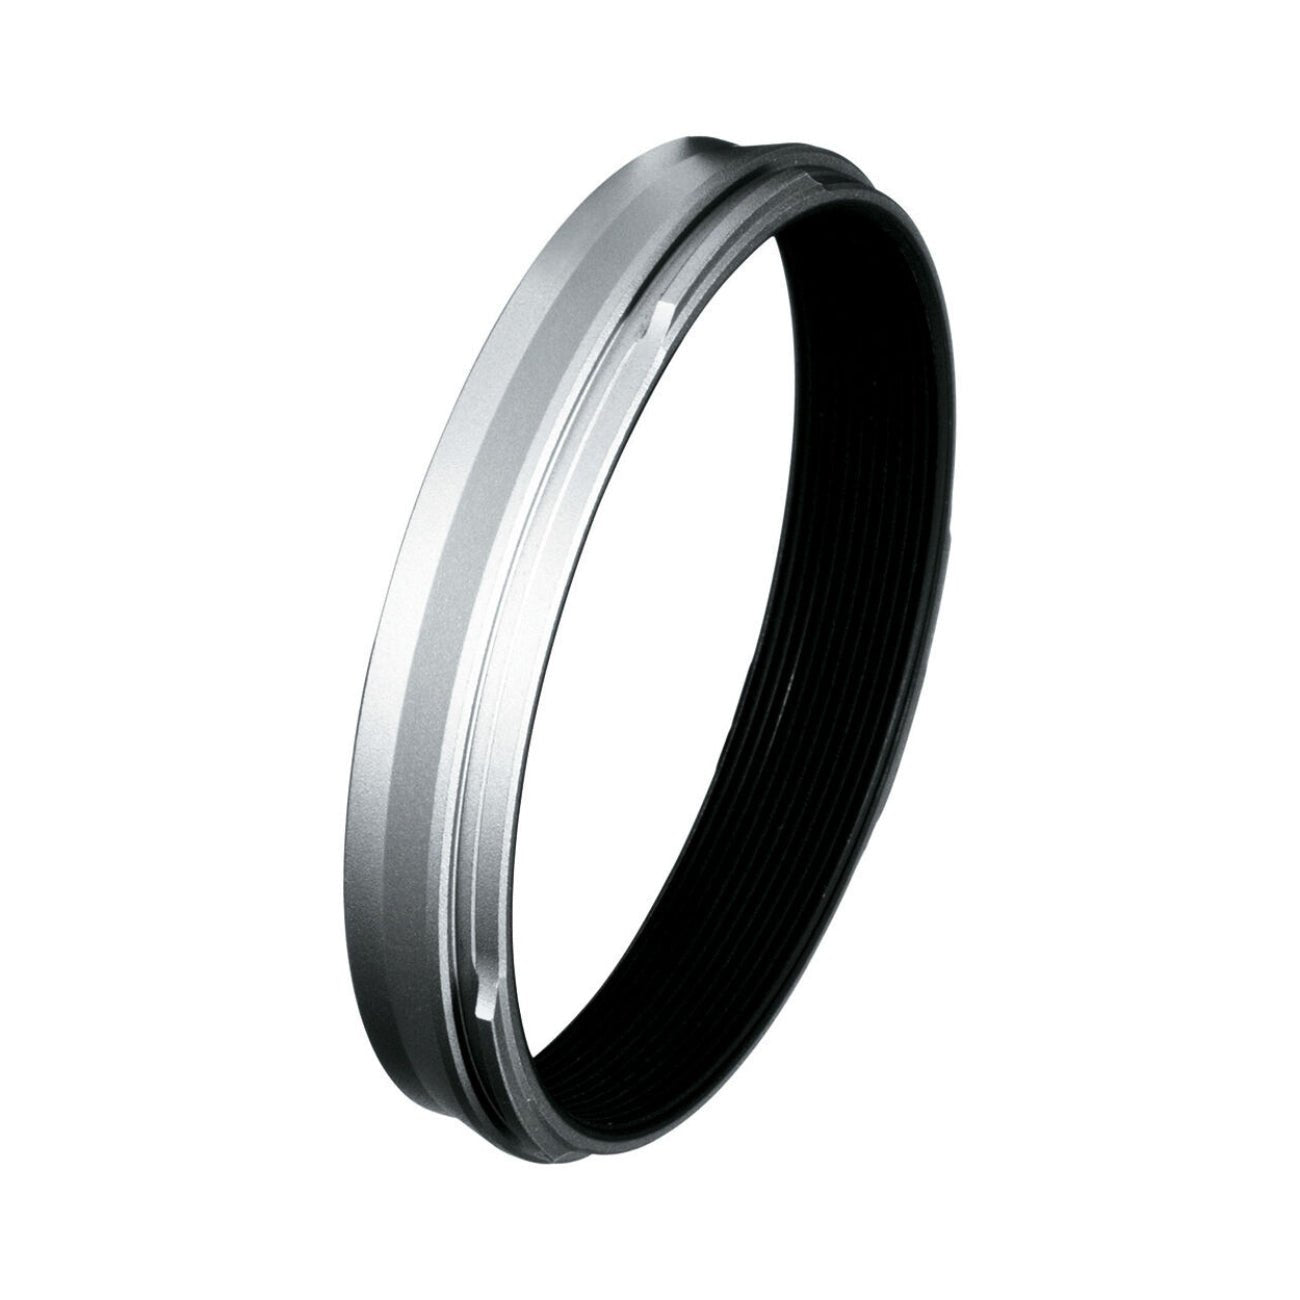 Fujifilm AR-X100 Adapter Ring (Black u0026 Silver)